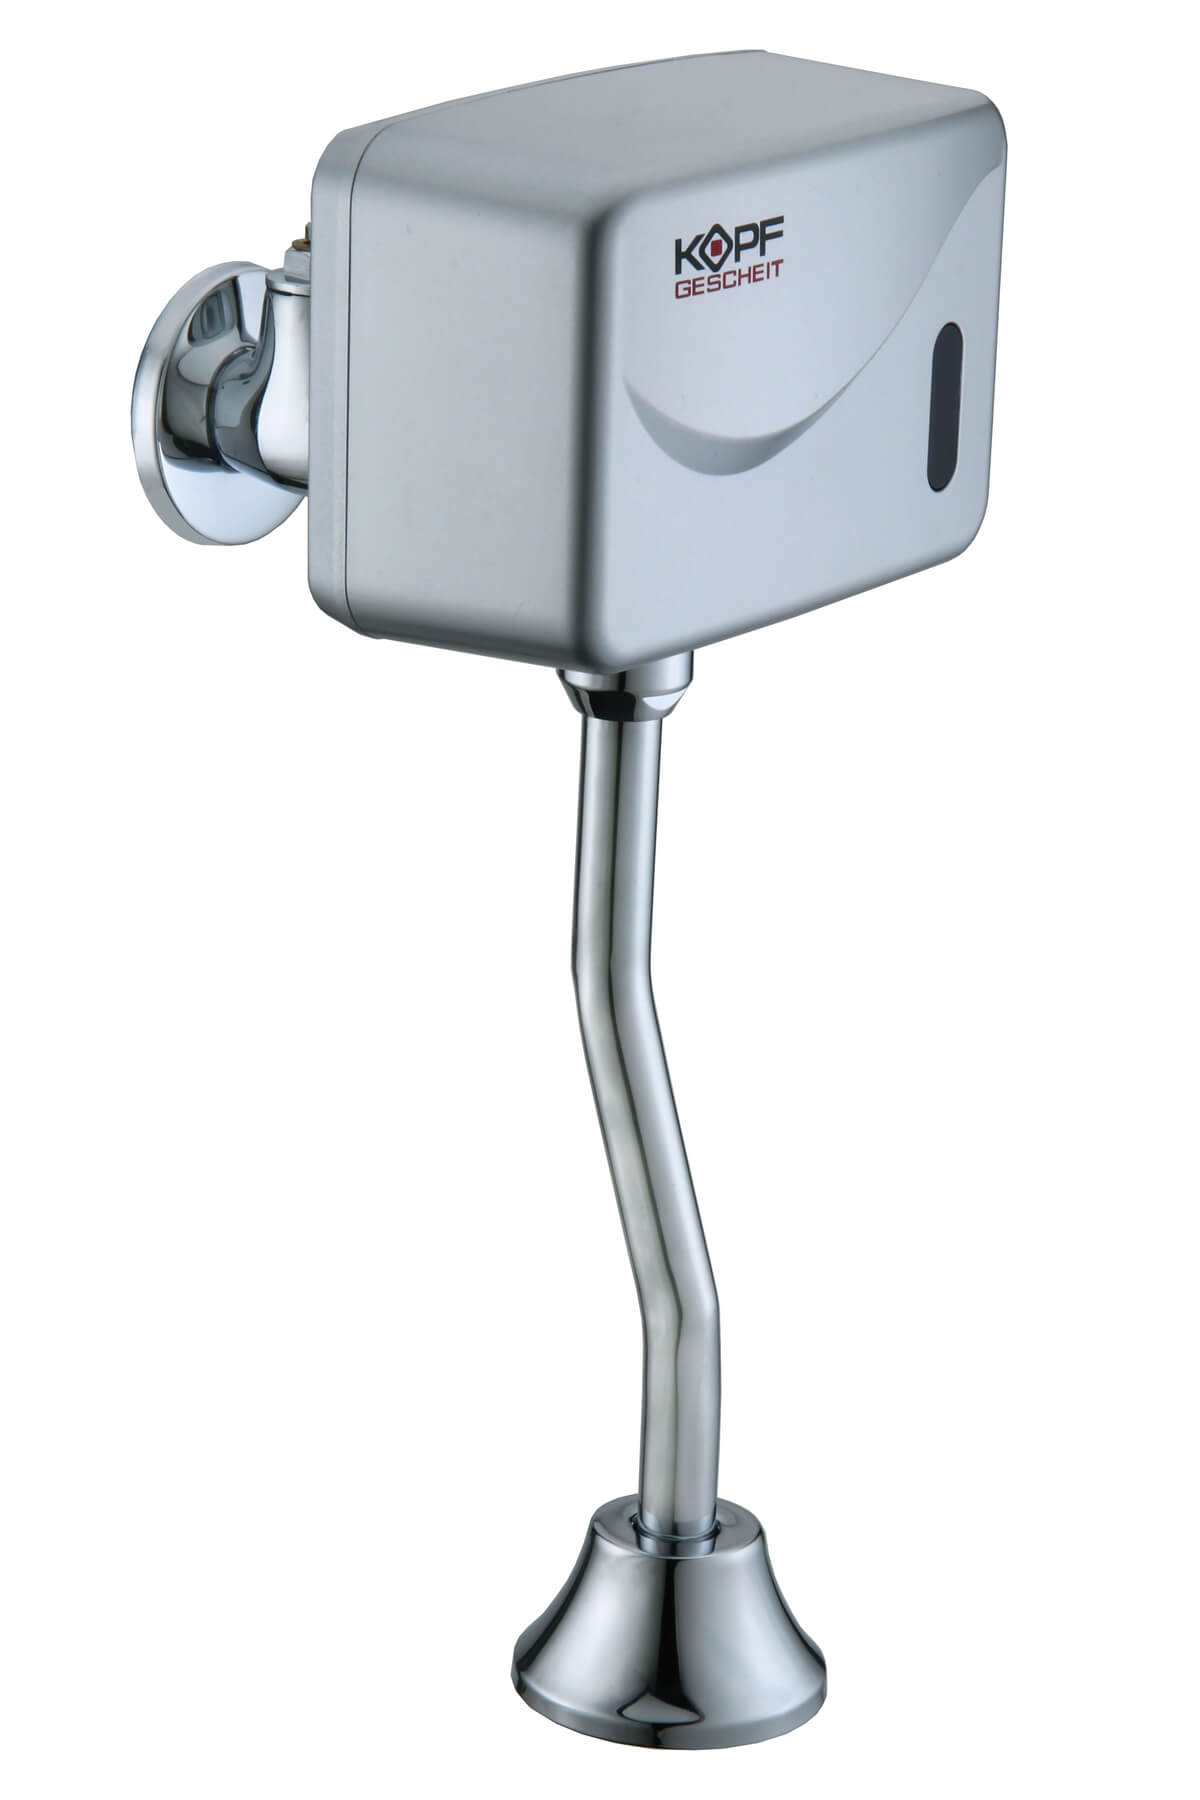 Automatic urinal flushing unit KG6524